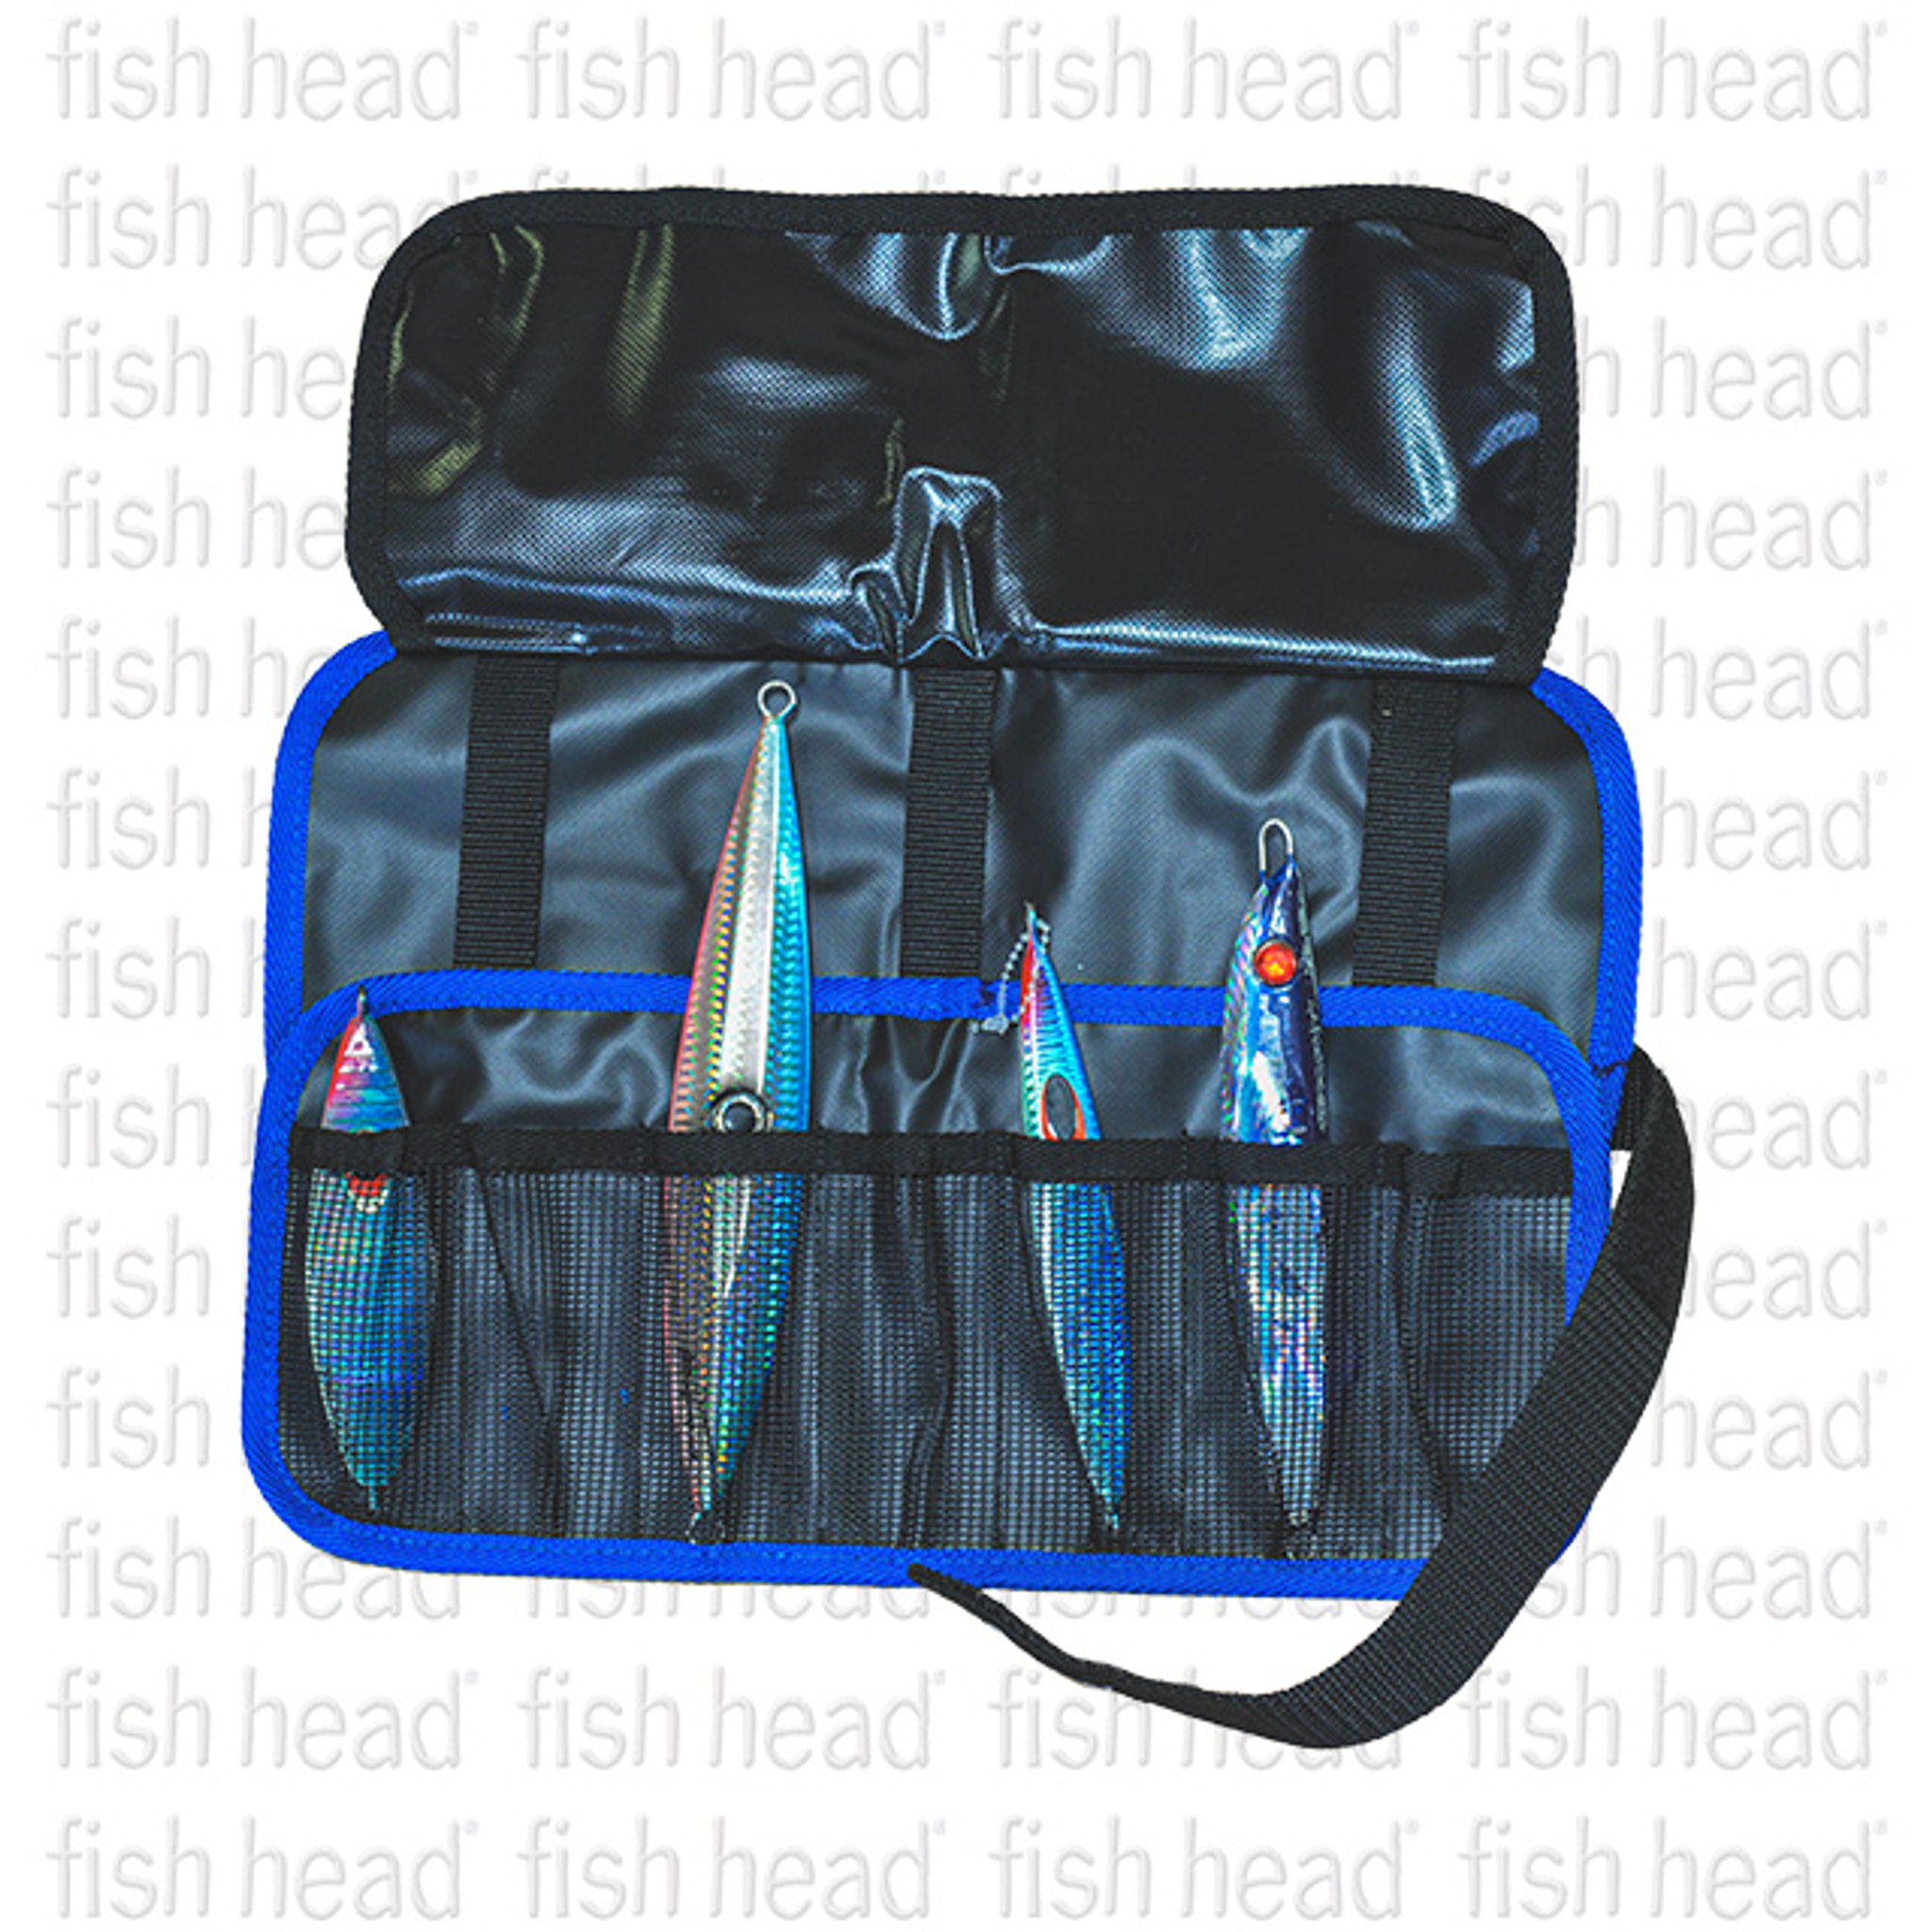 Shout Adjustable Jig Bag - Fish Head